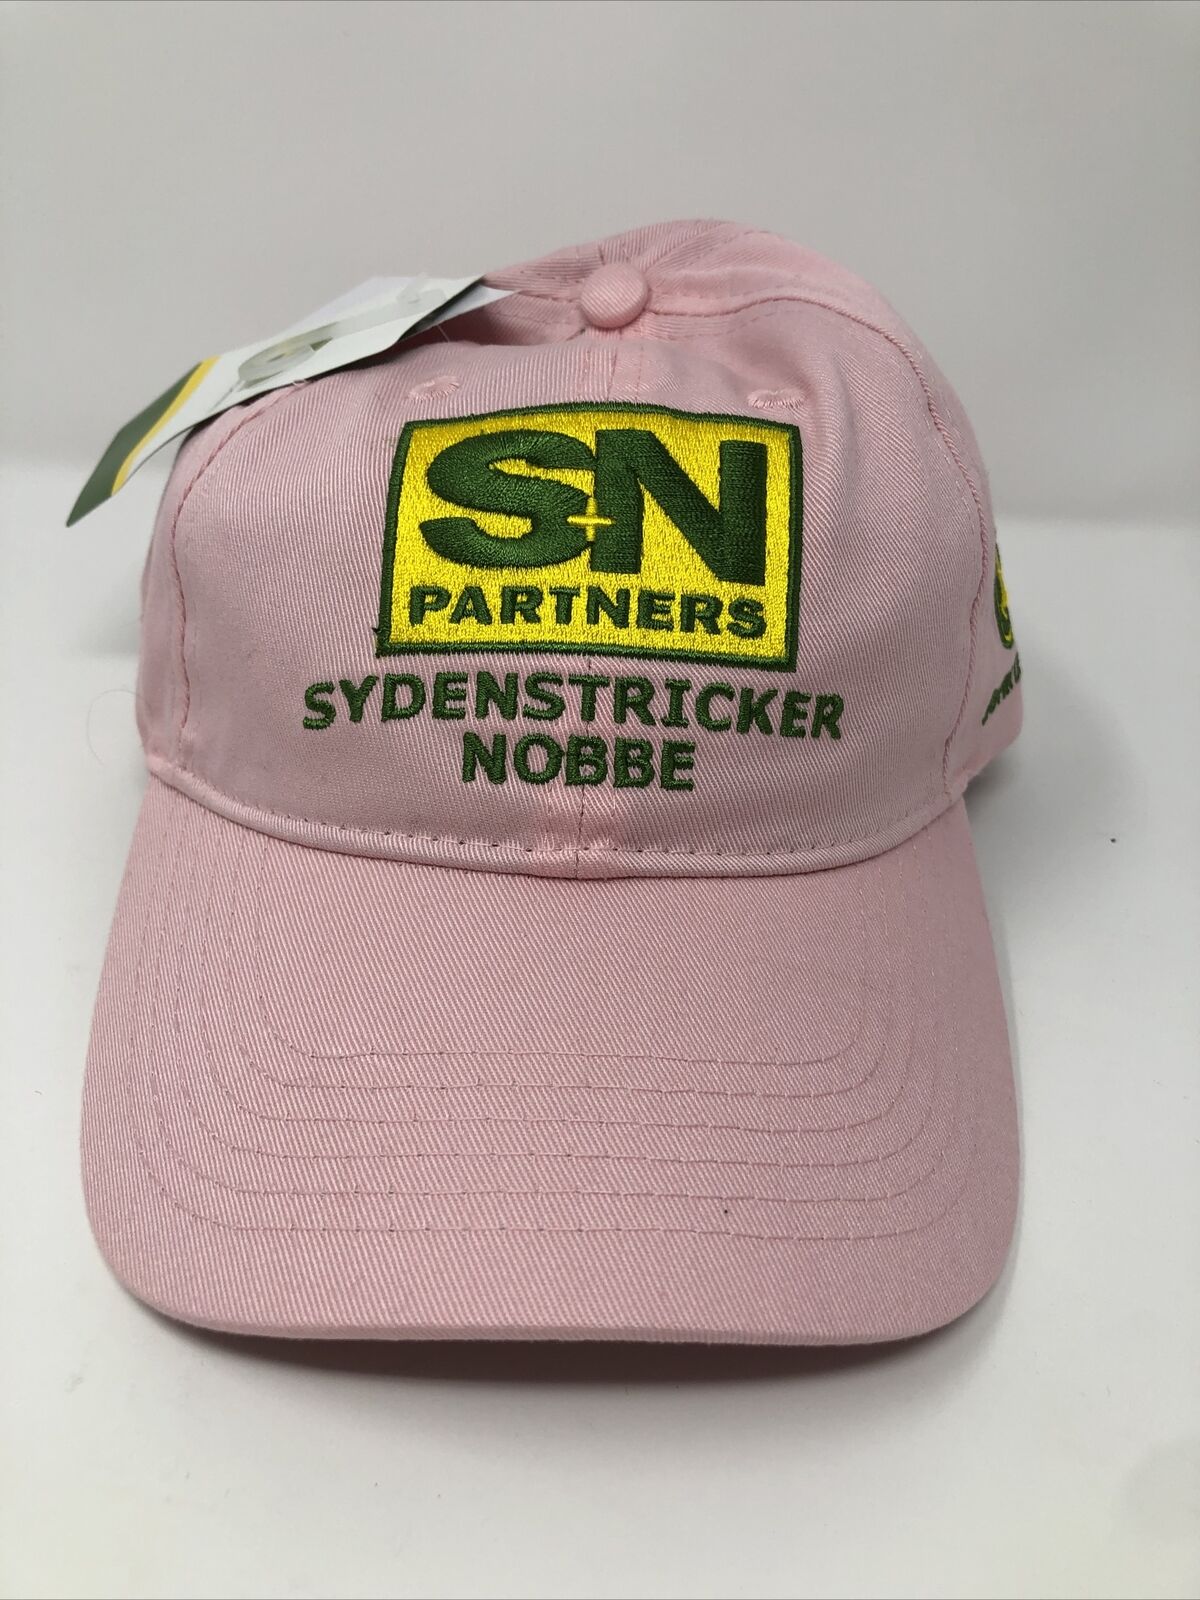 John Deere Pink Hat New S&n Partners Sydenstricker Nobbe